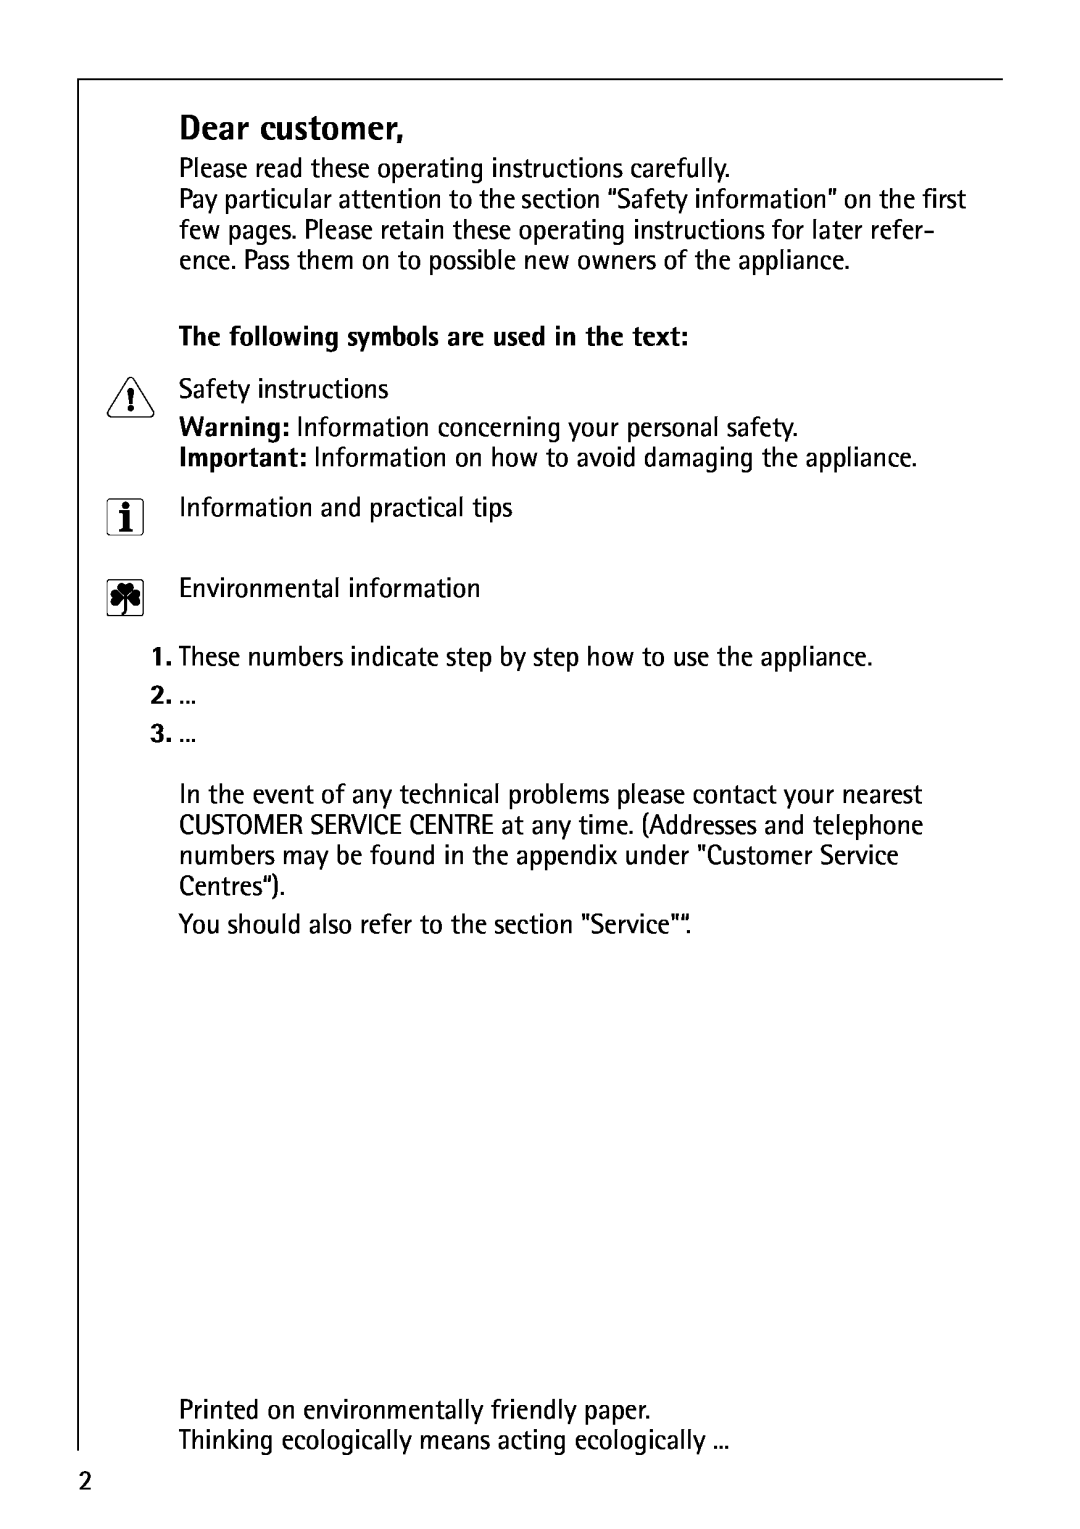 AEG E4100-1 manual Dear customer, The following symbols are used in the text 